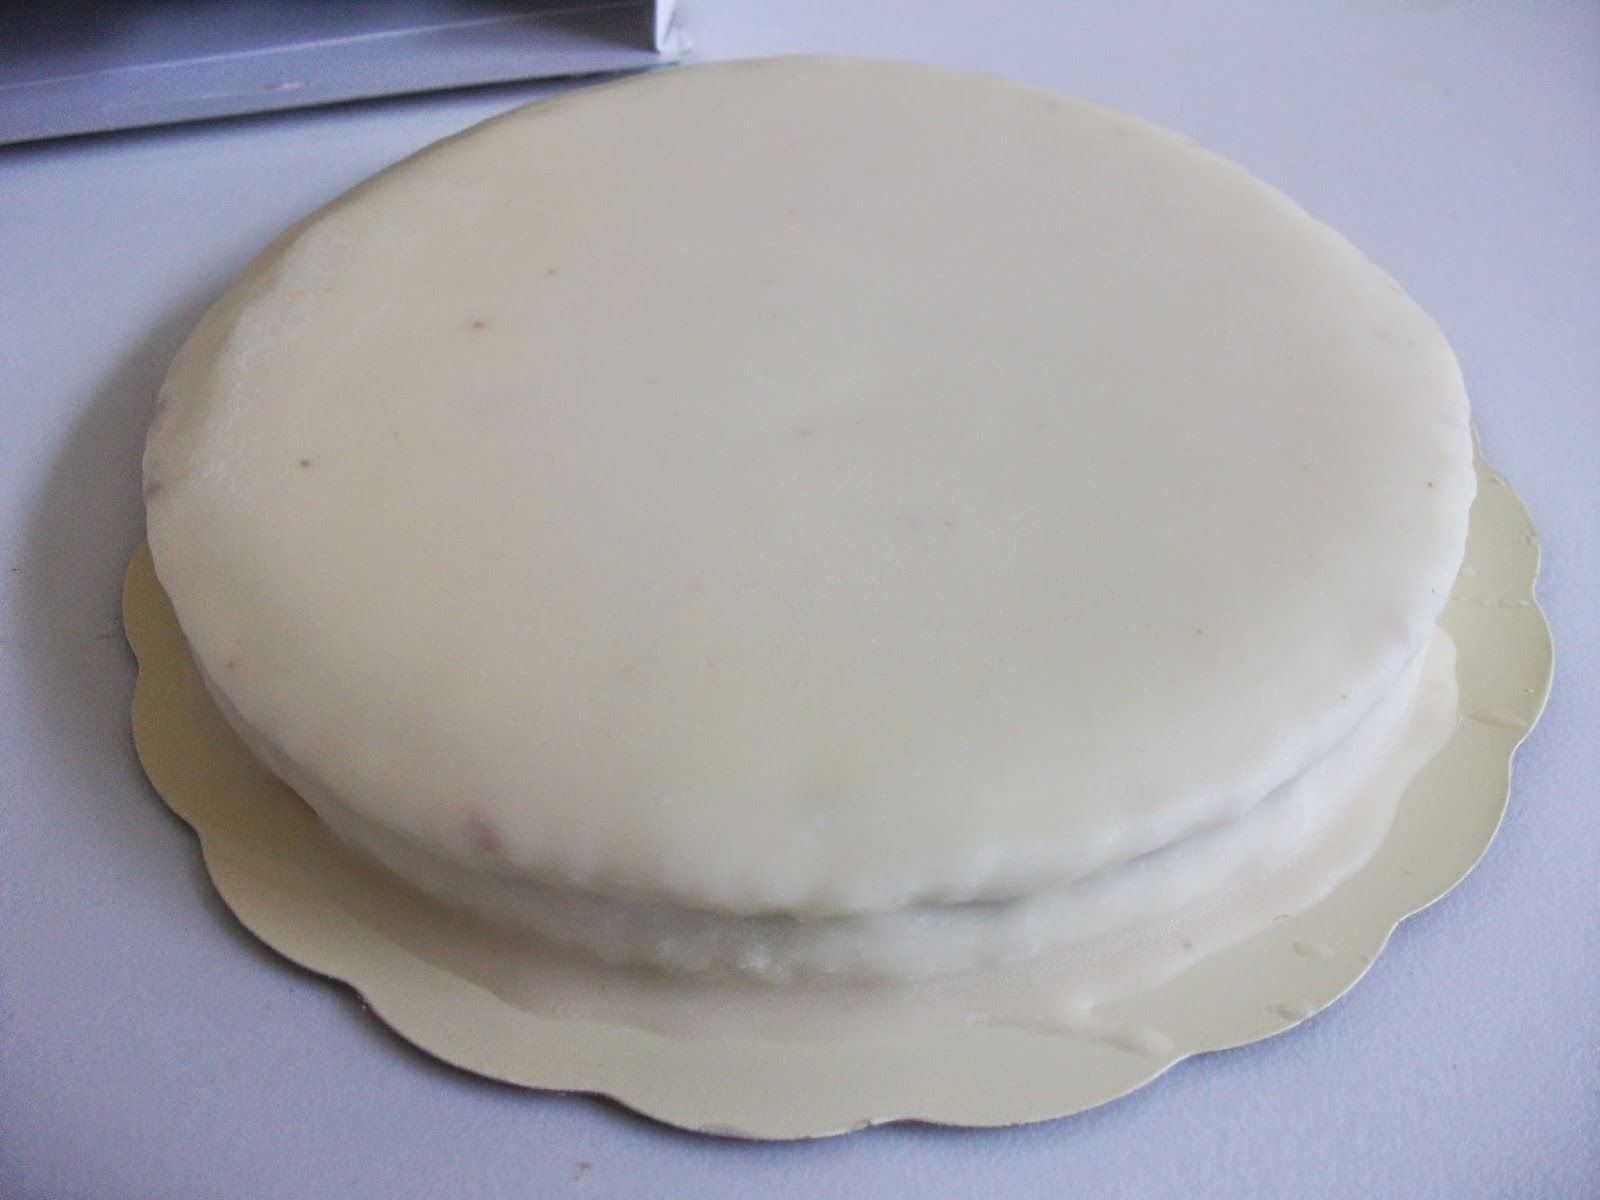 philadelphia almondy lemon cheesecake